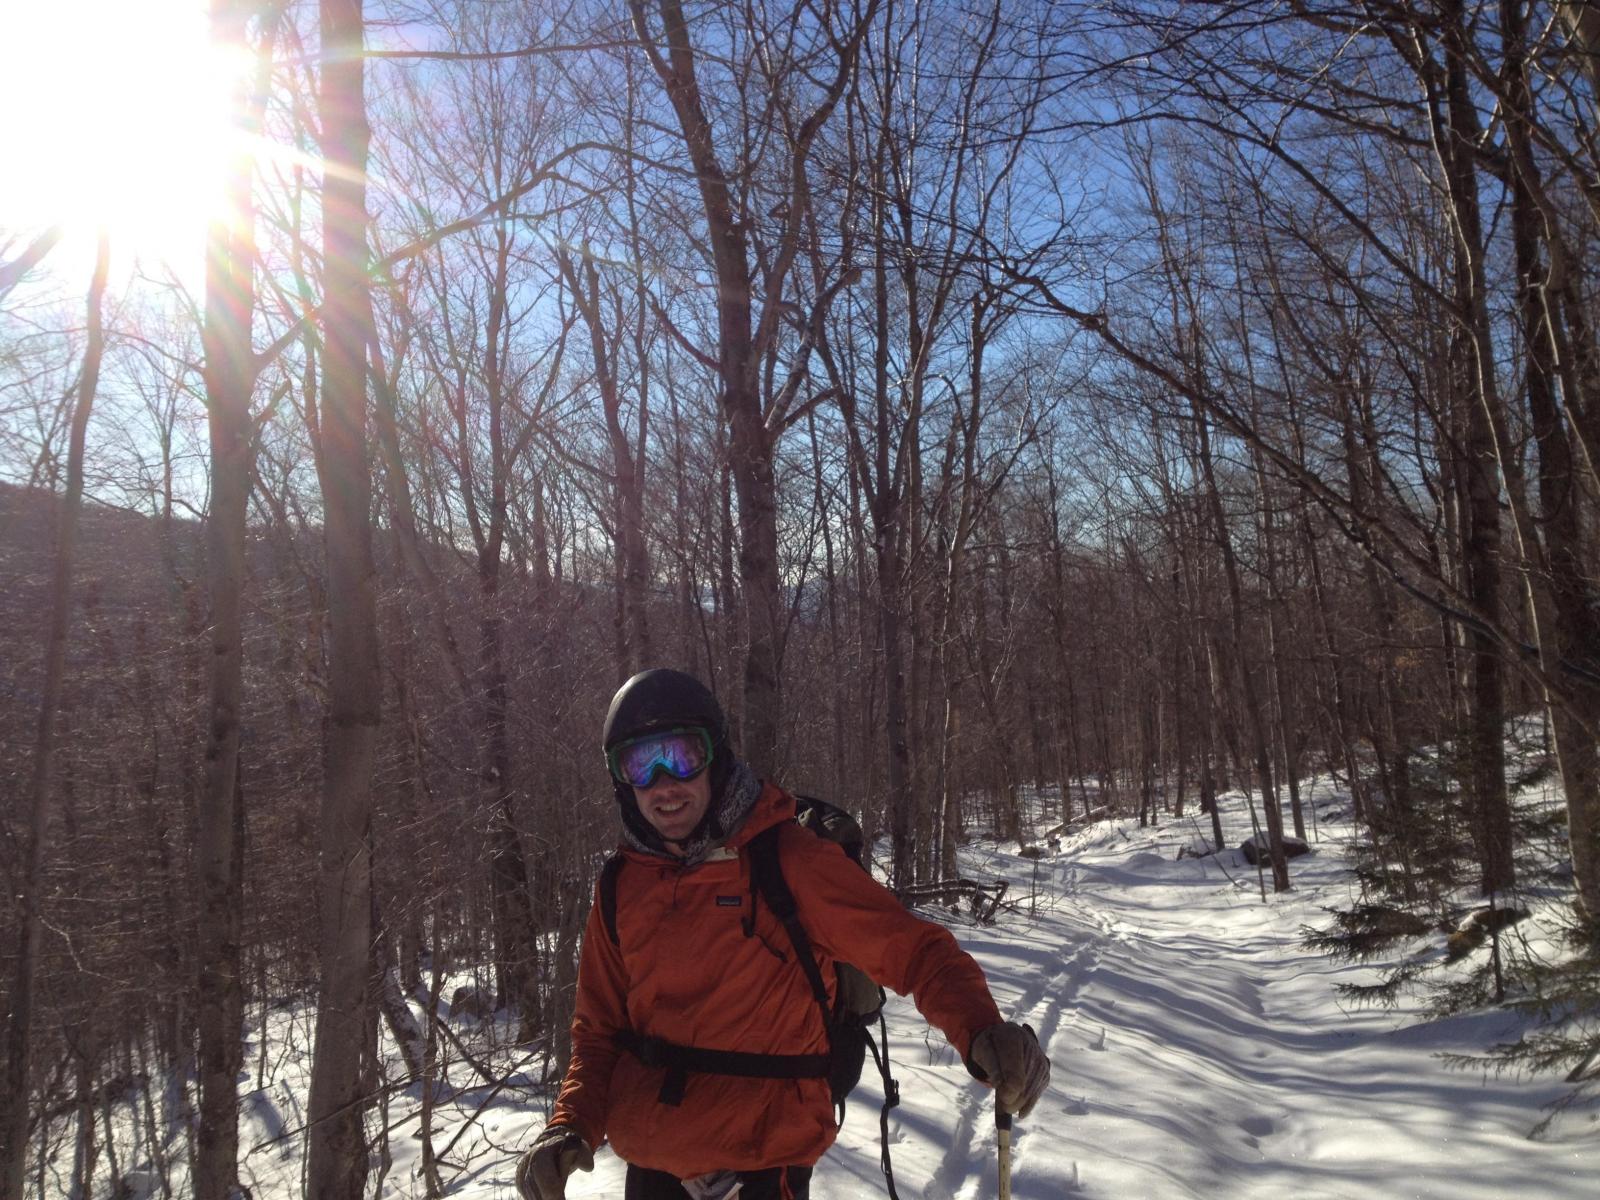 Lab Ski Weekend Vermont, January 2013 